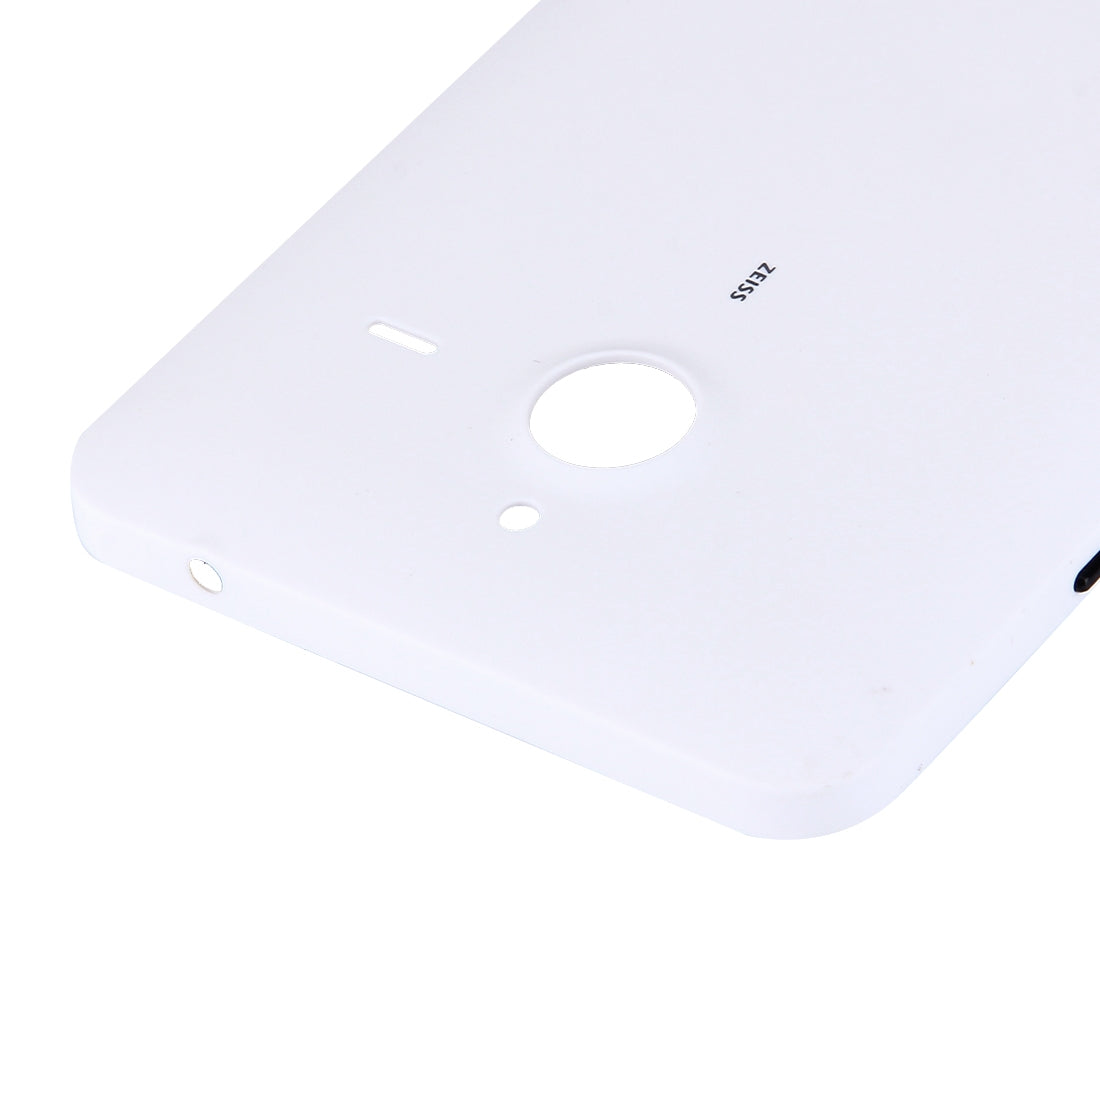 Tapa Bateria Back Cover Microsoft Lumia 640 XL Blanco